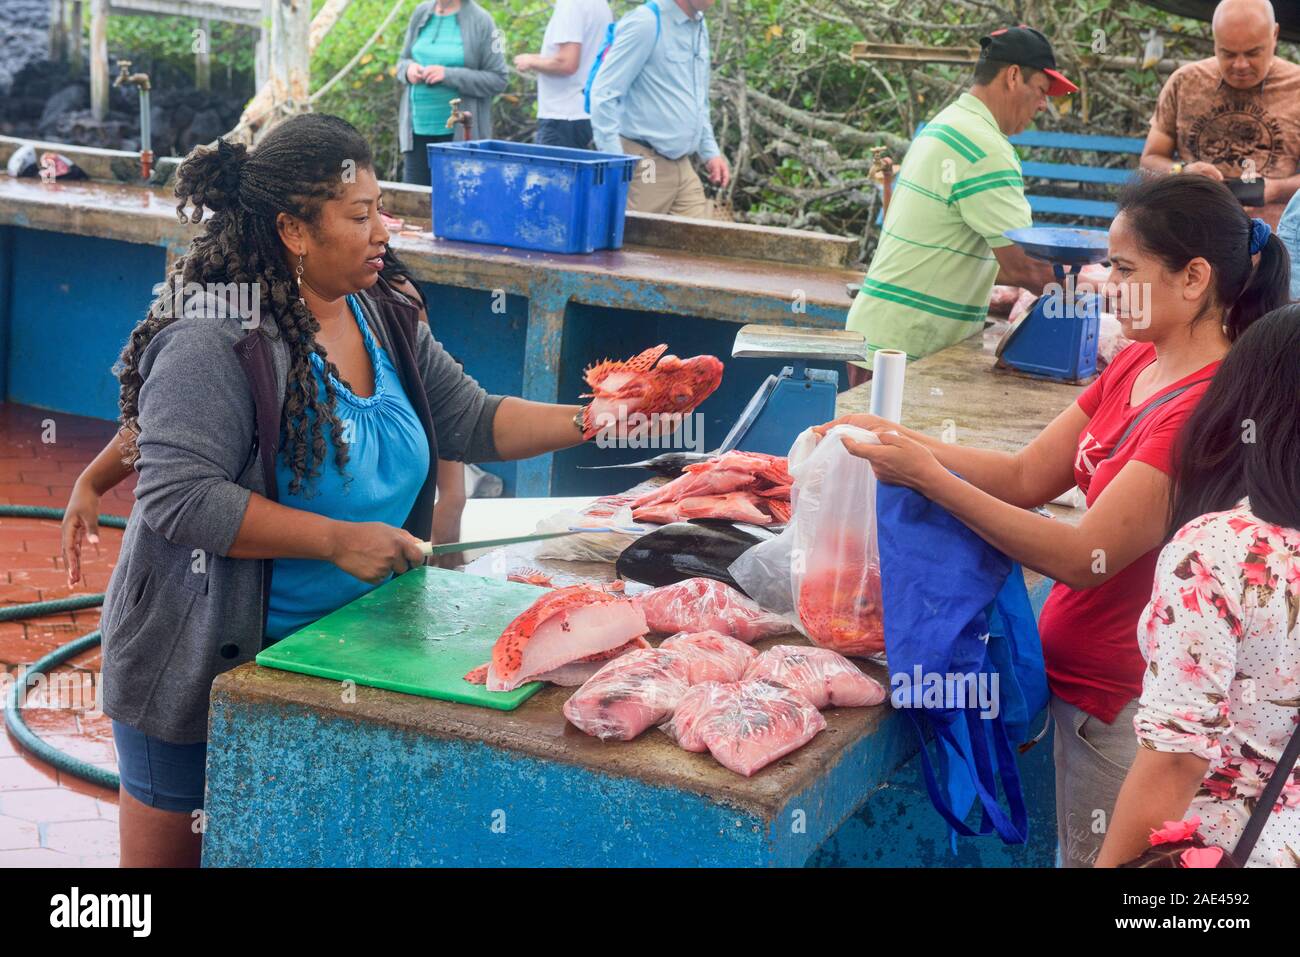 Fresh brujo (scorpion fish) in the Puerto Ayora Fish Market, Isla Santa Cruz, Galapagos Islands, Ecuador Stock Photo